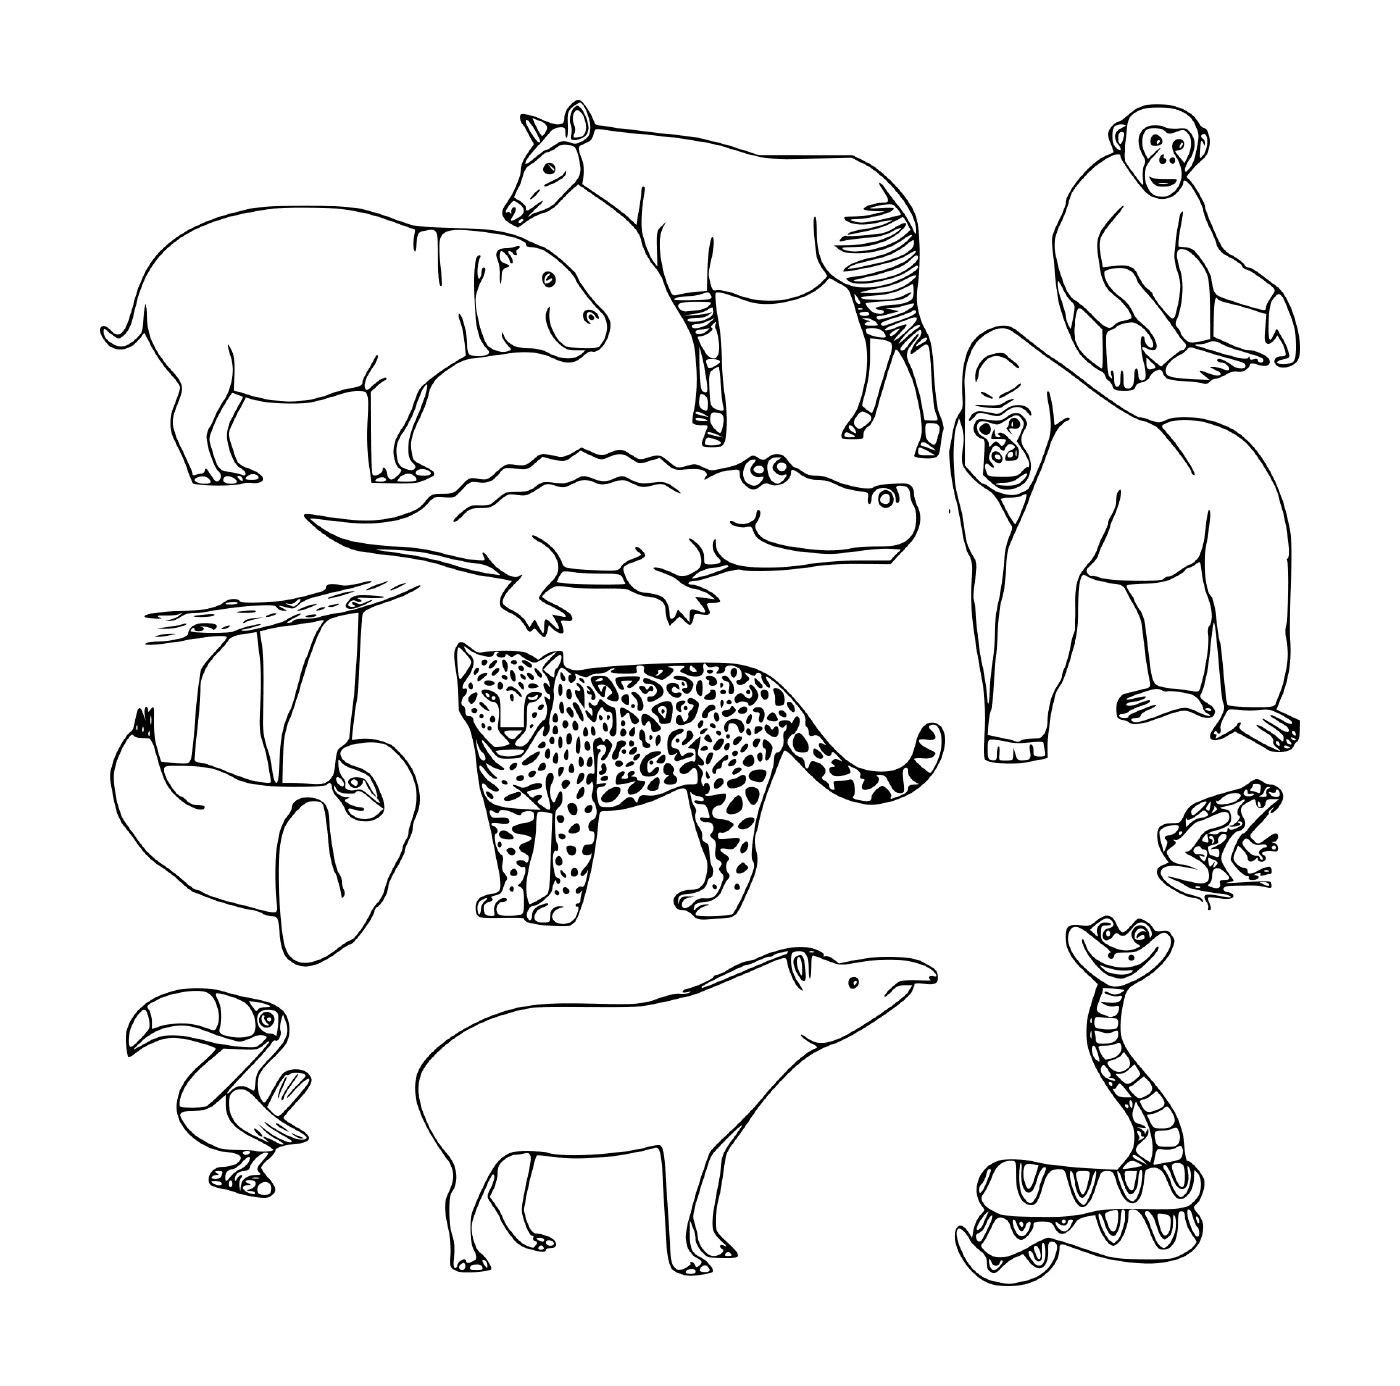   Un groupe d'animaux sauvages 